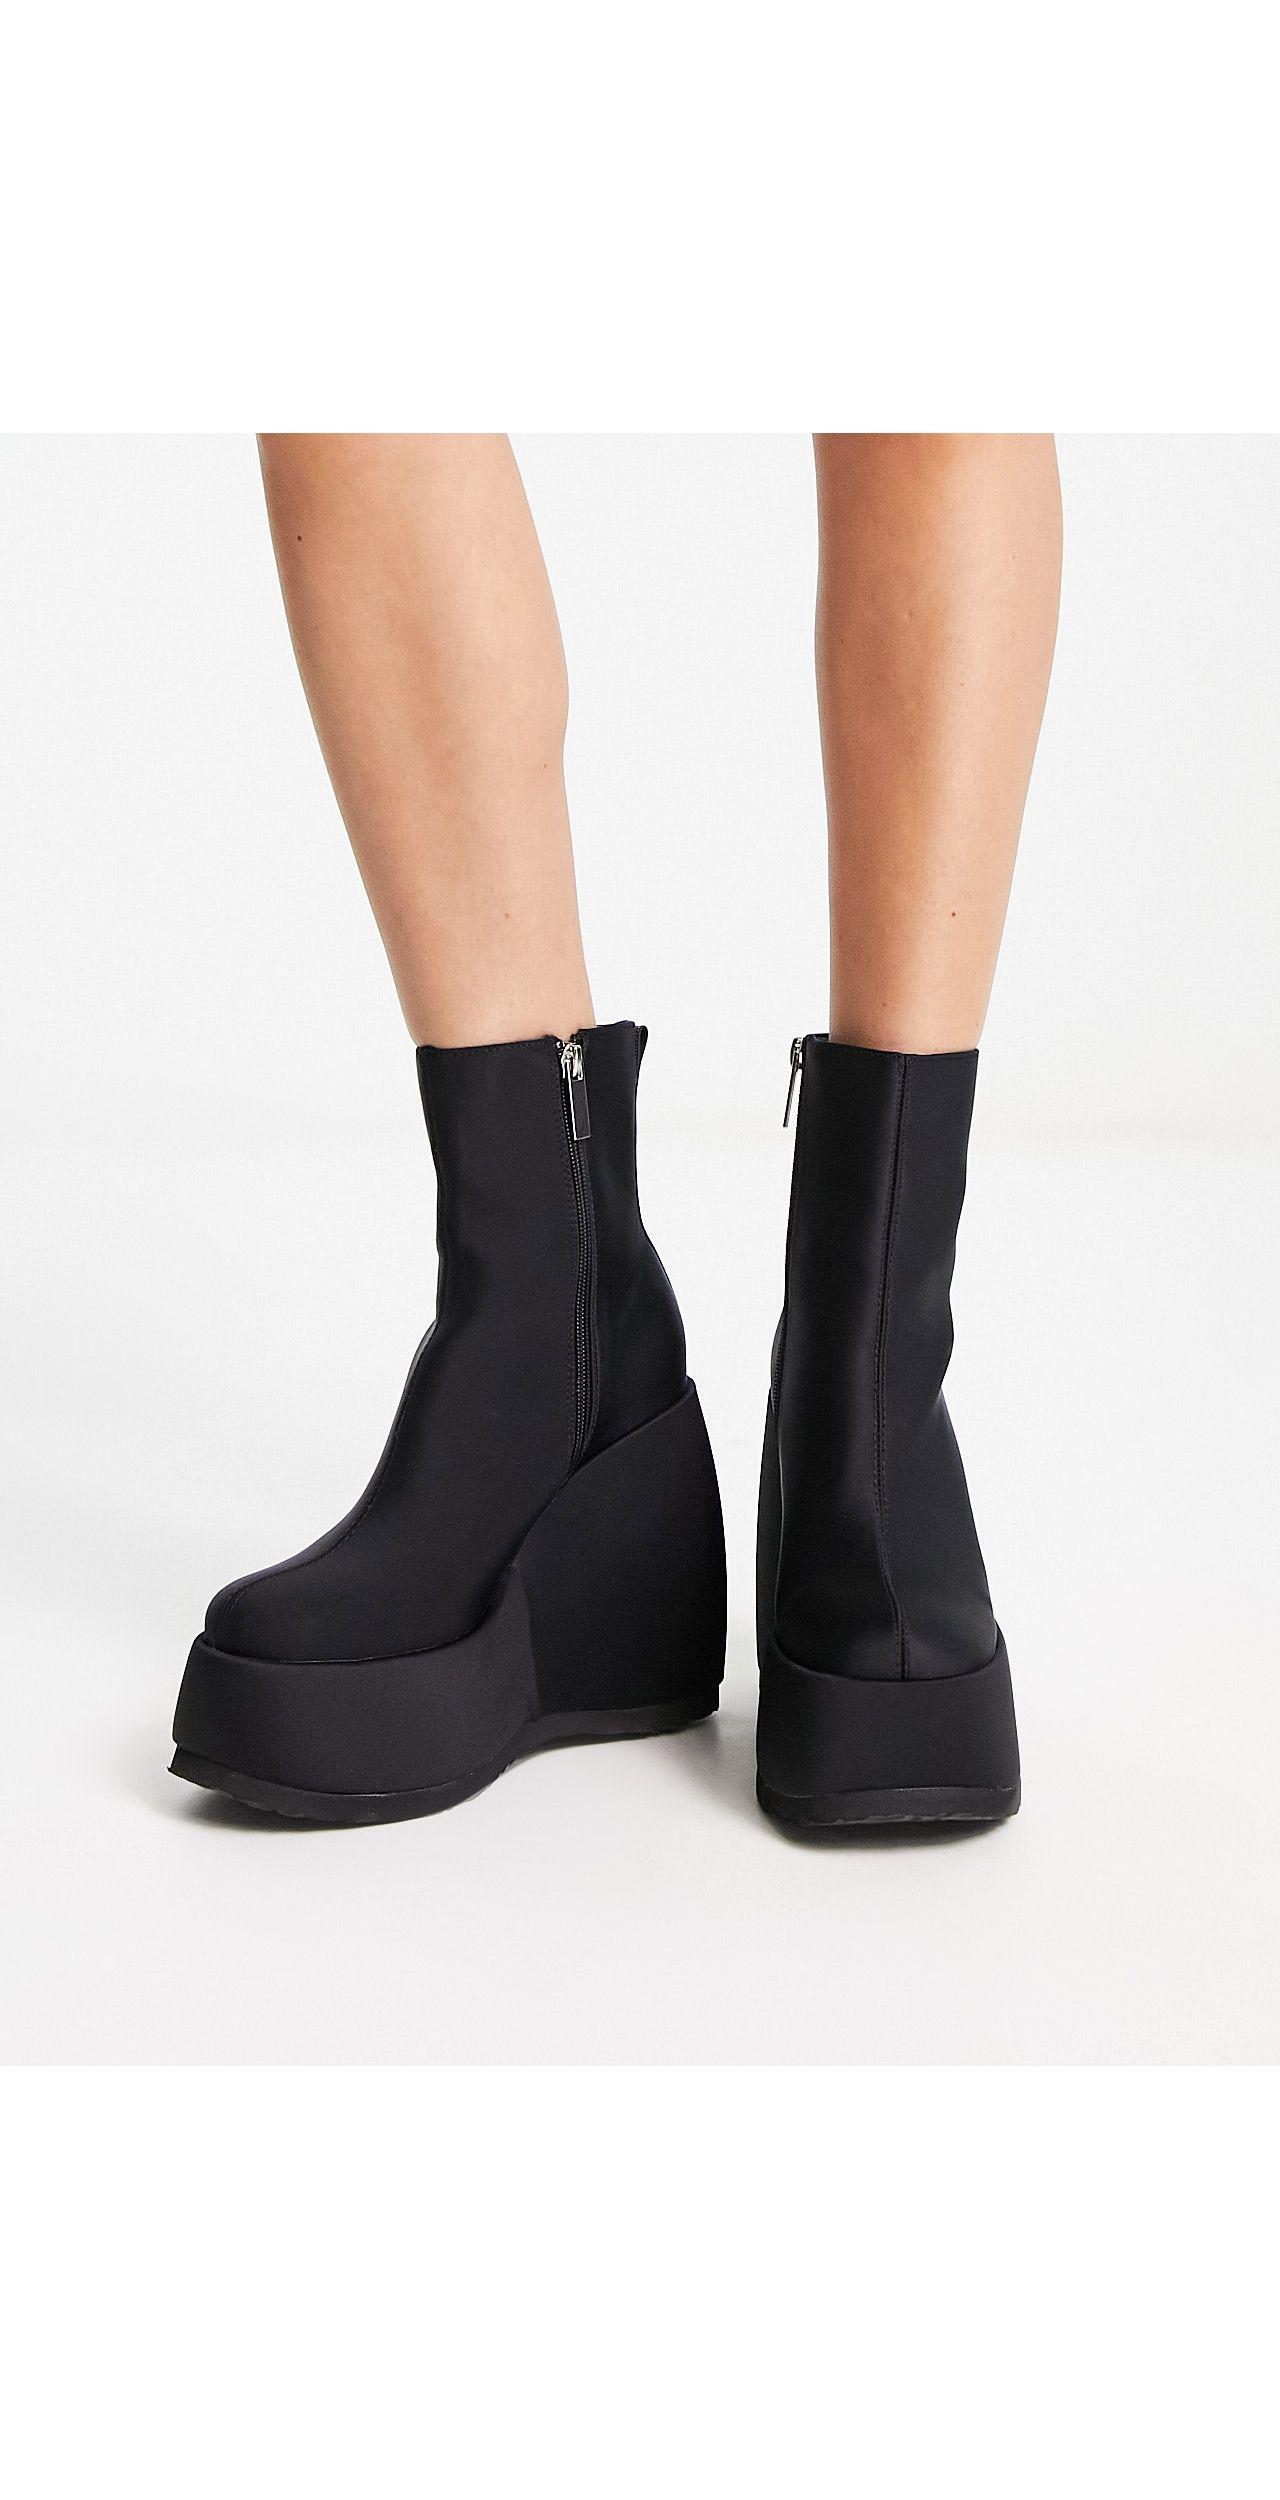 Shellys London Roxanne Wedge Boots in Black | Lyst